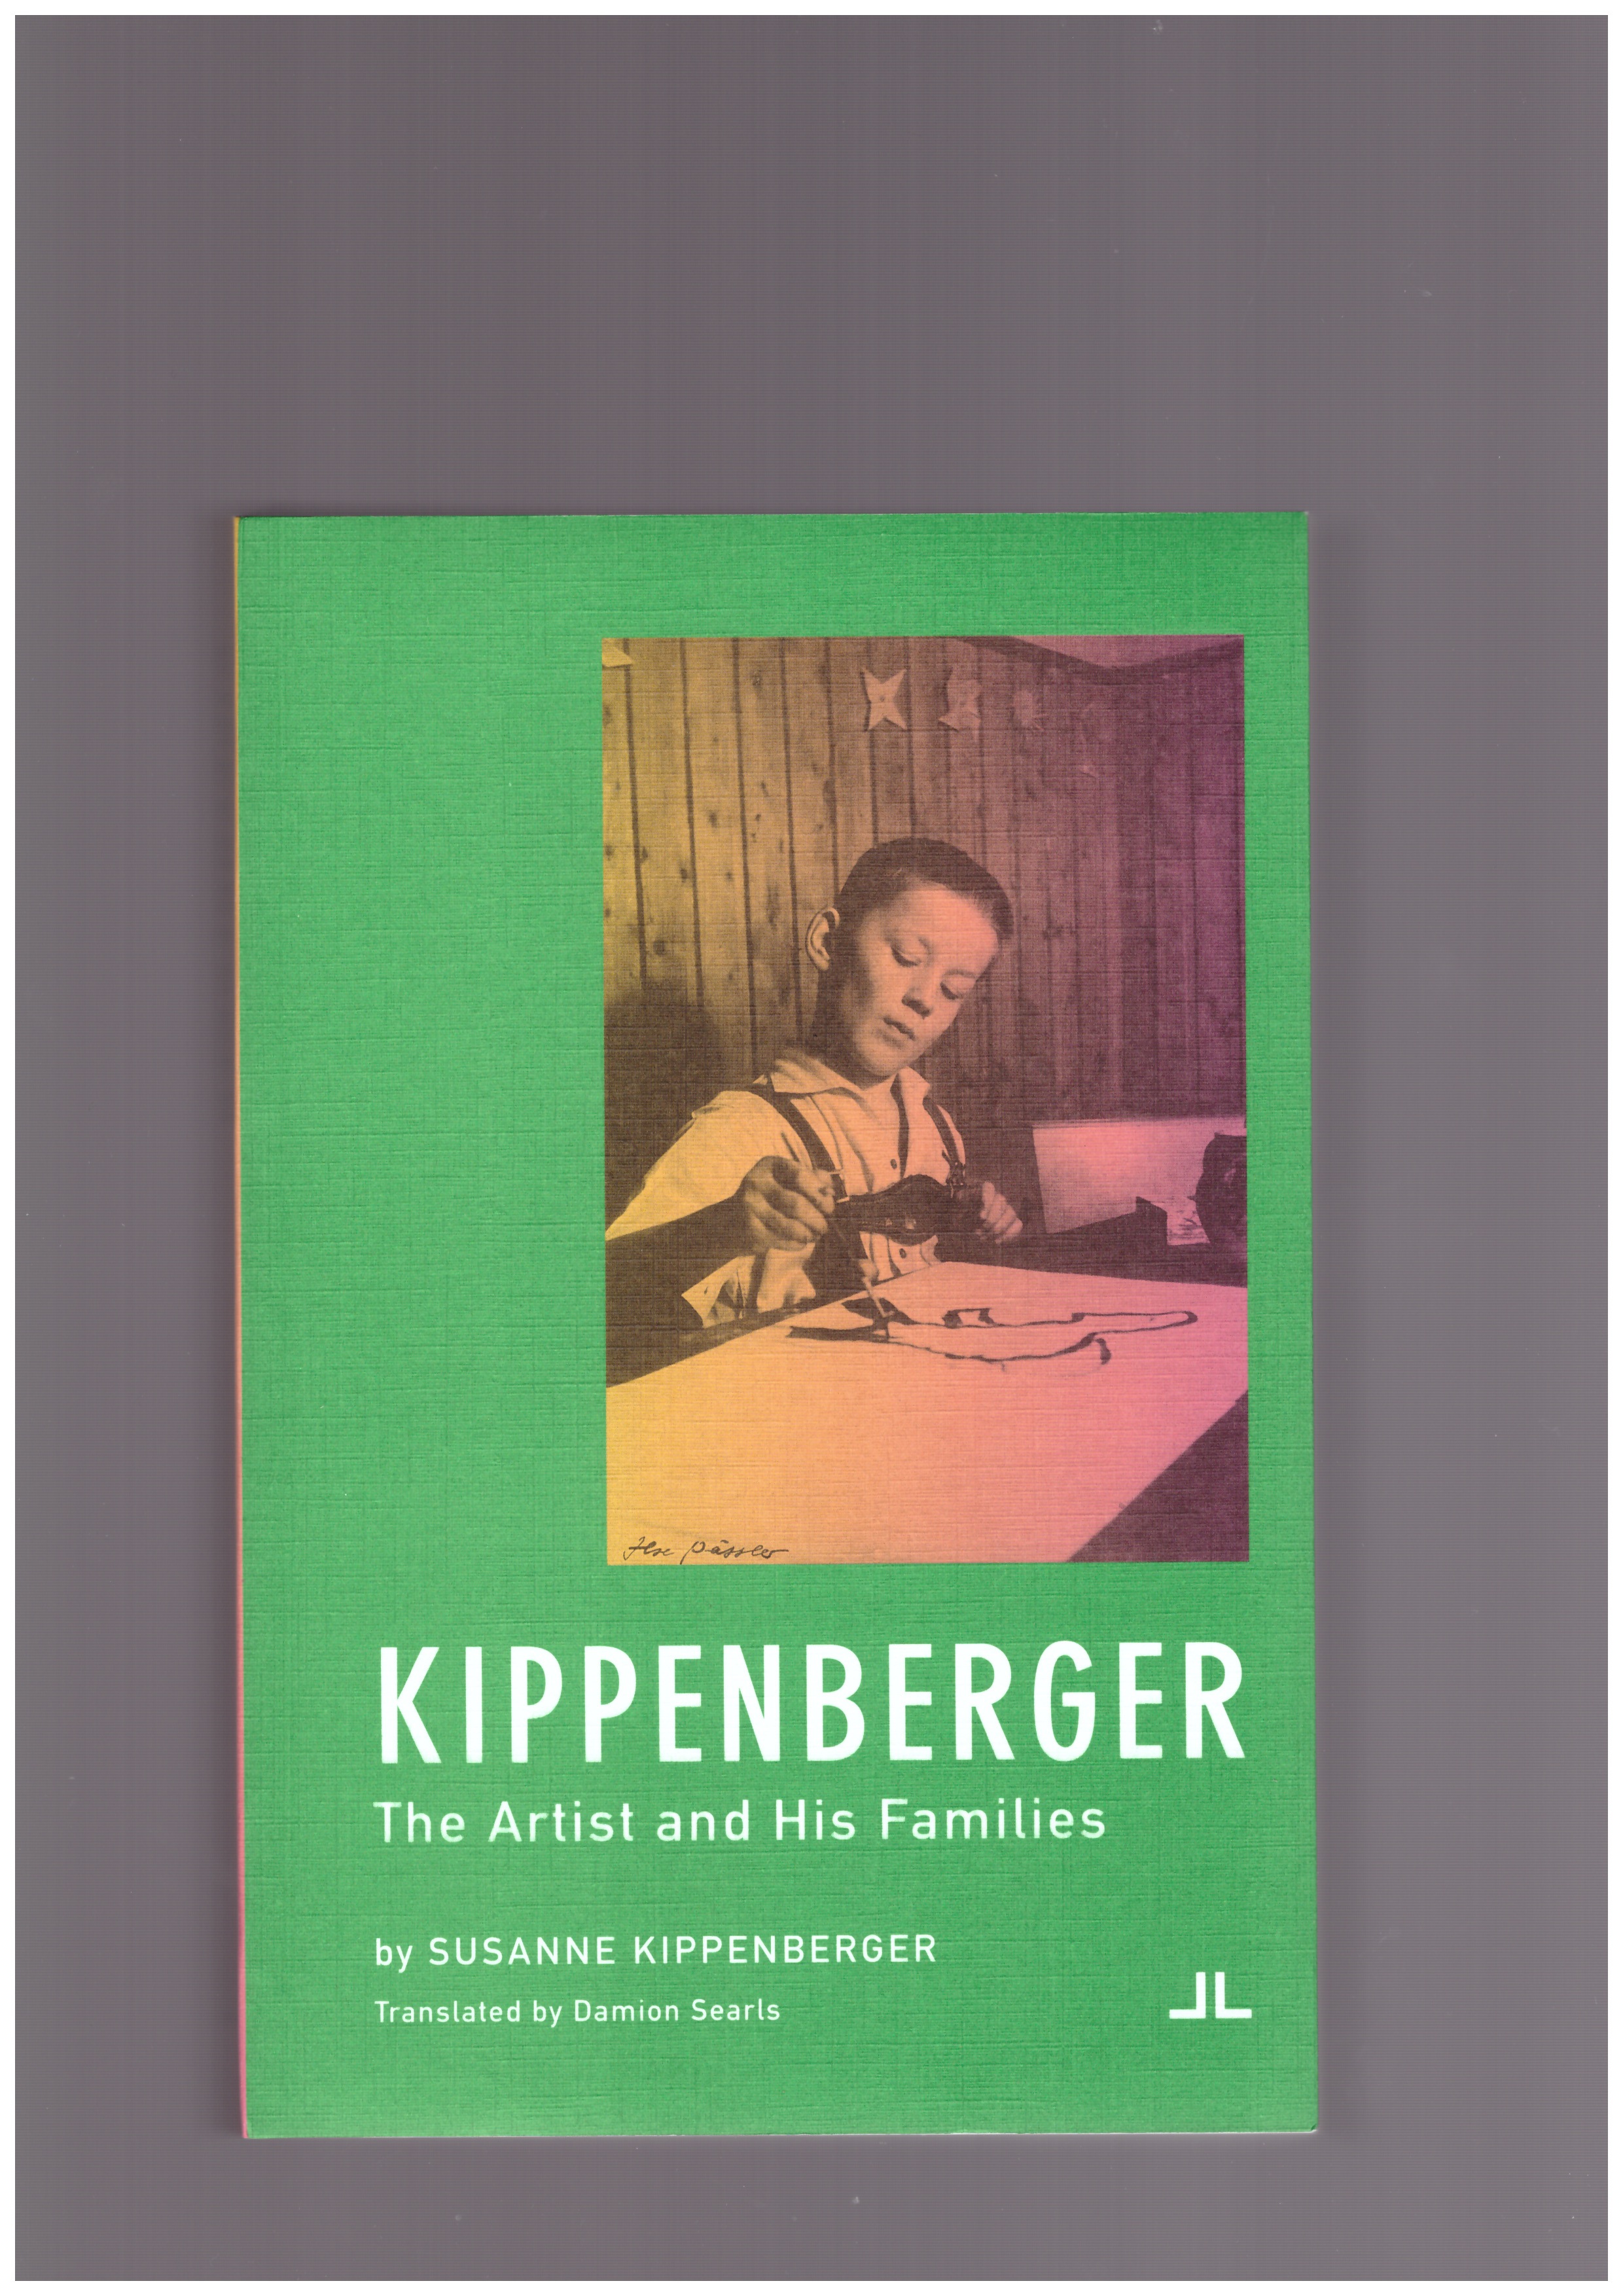 KIPPENBERGER, Susanne - Kippenberger: The Artist and His Families